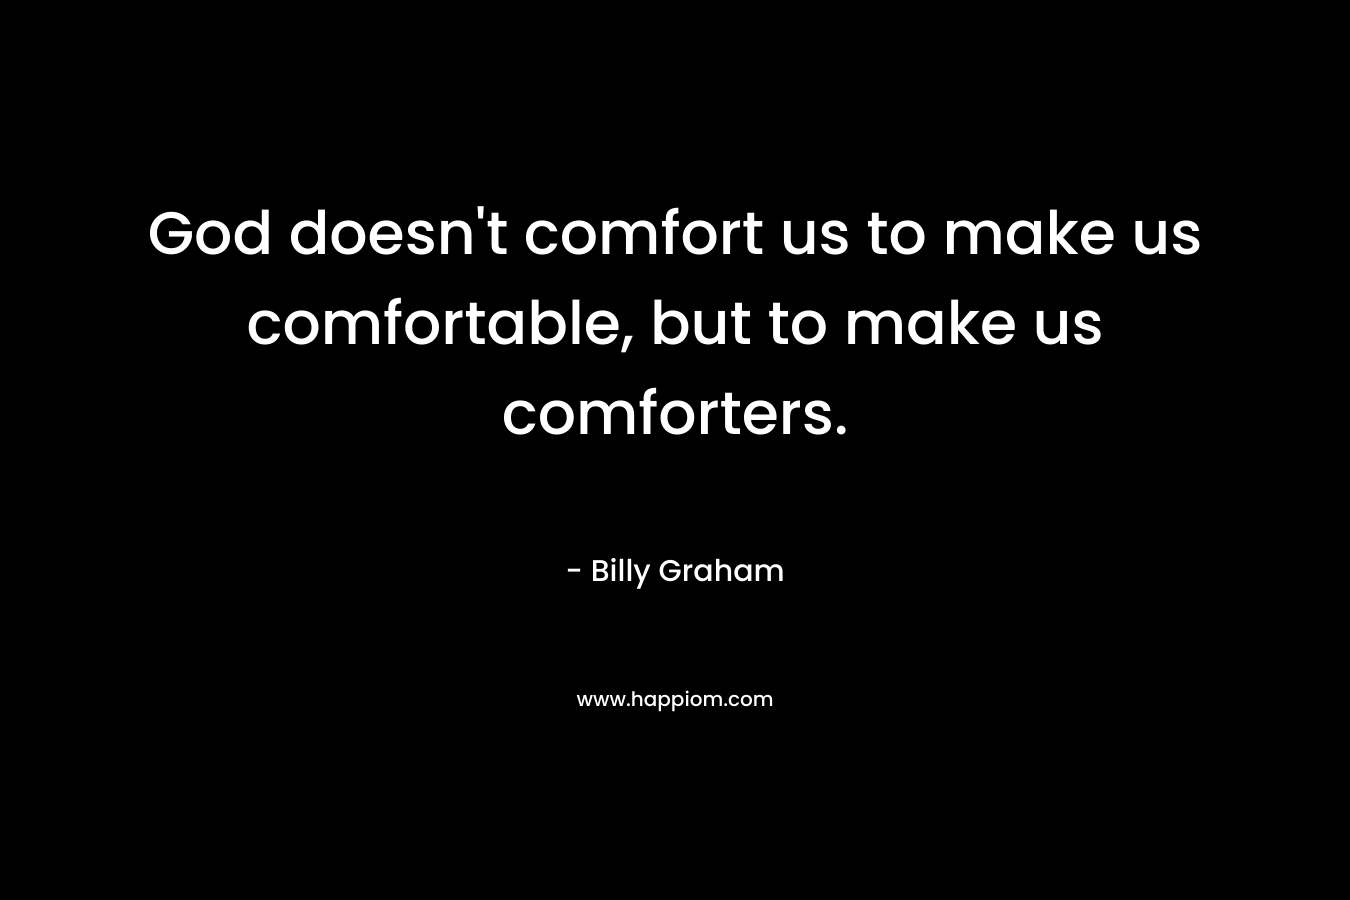 God doesn't comfort us to make us comfortable, but to make us comforters.